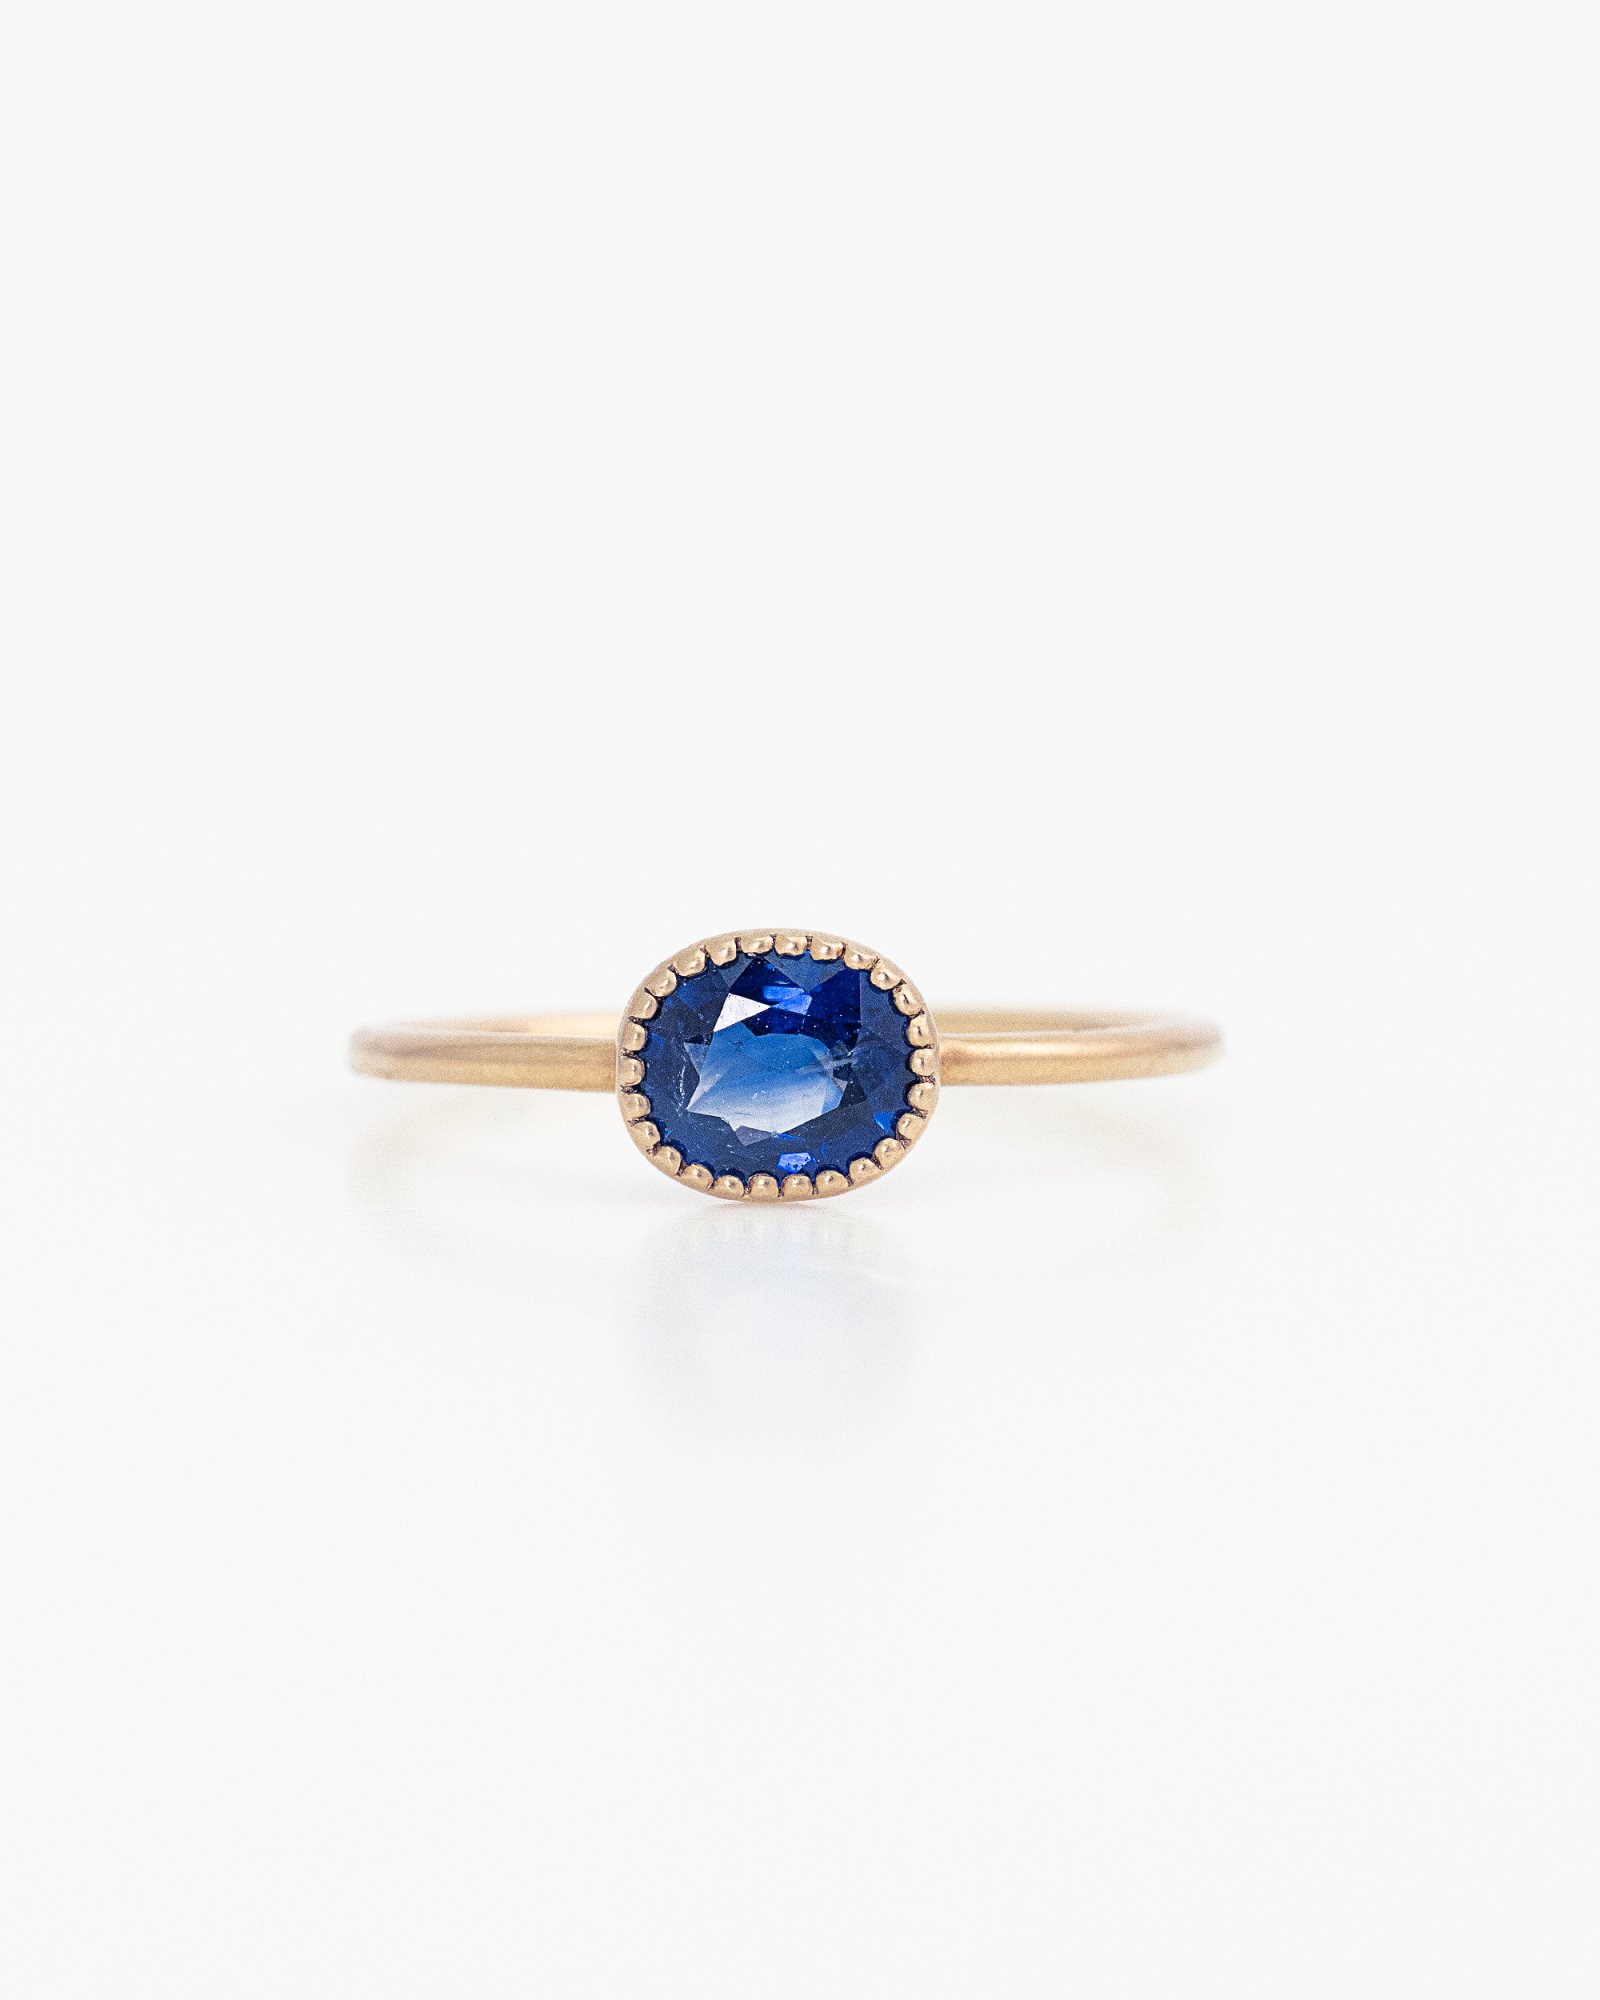 K18 Bicolor Sapphire Ring / Oval Milgrain